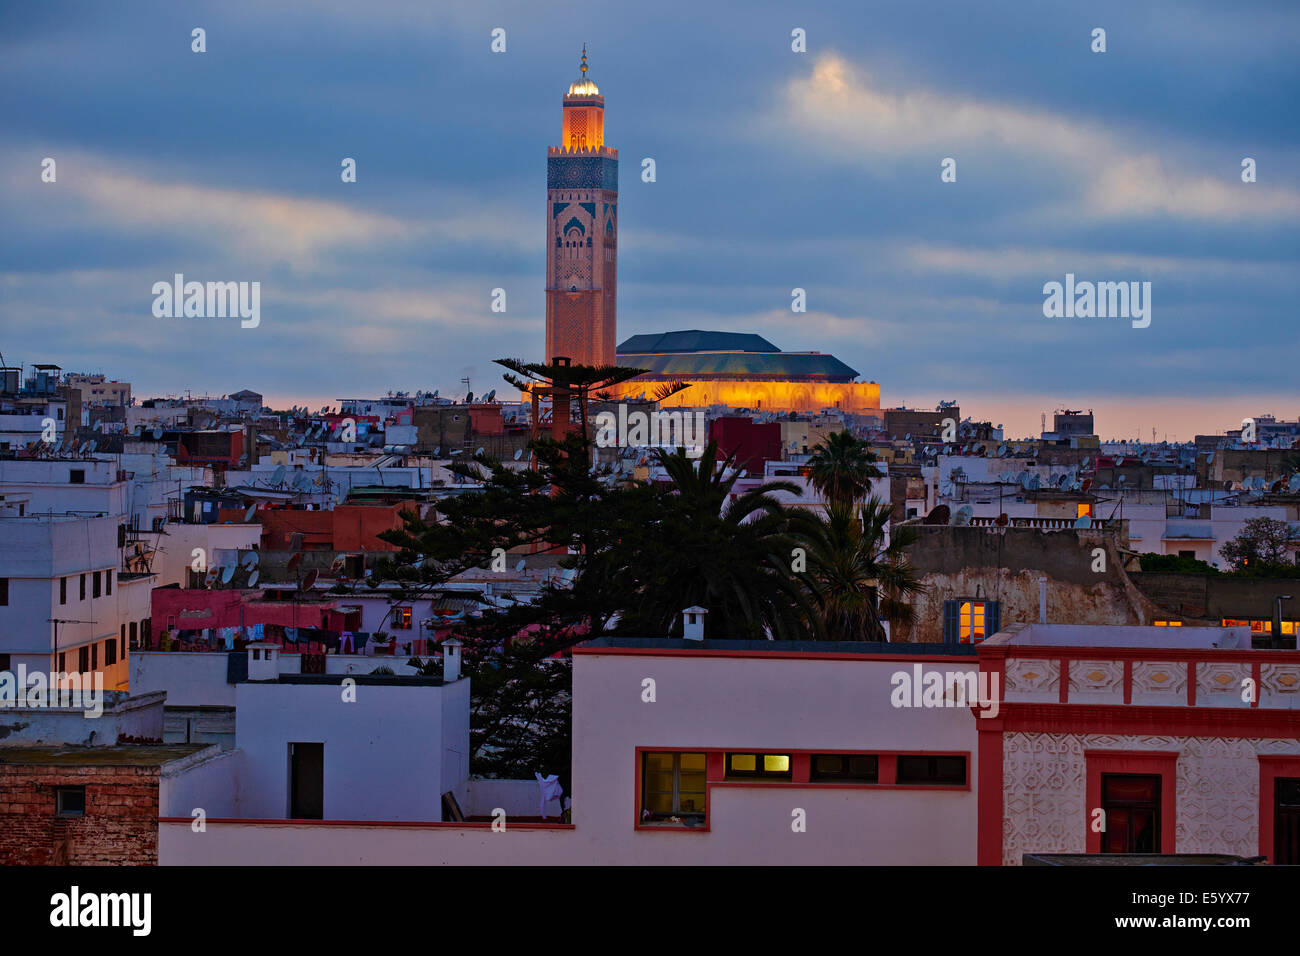 Morocco, Casablanca, Old Medina and Hassan II mosque Stock Photo